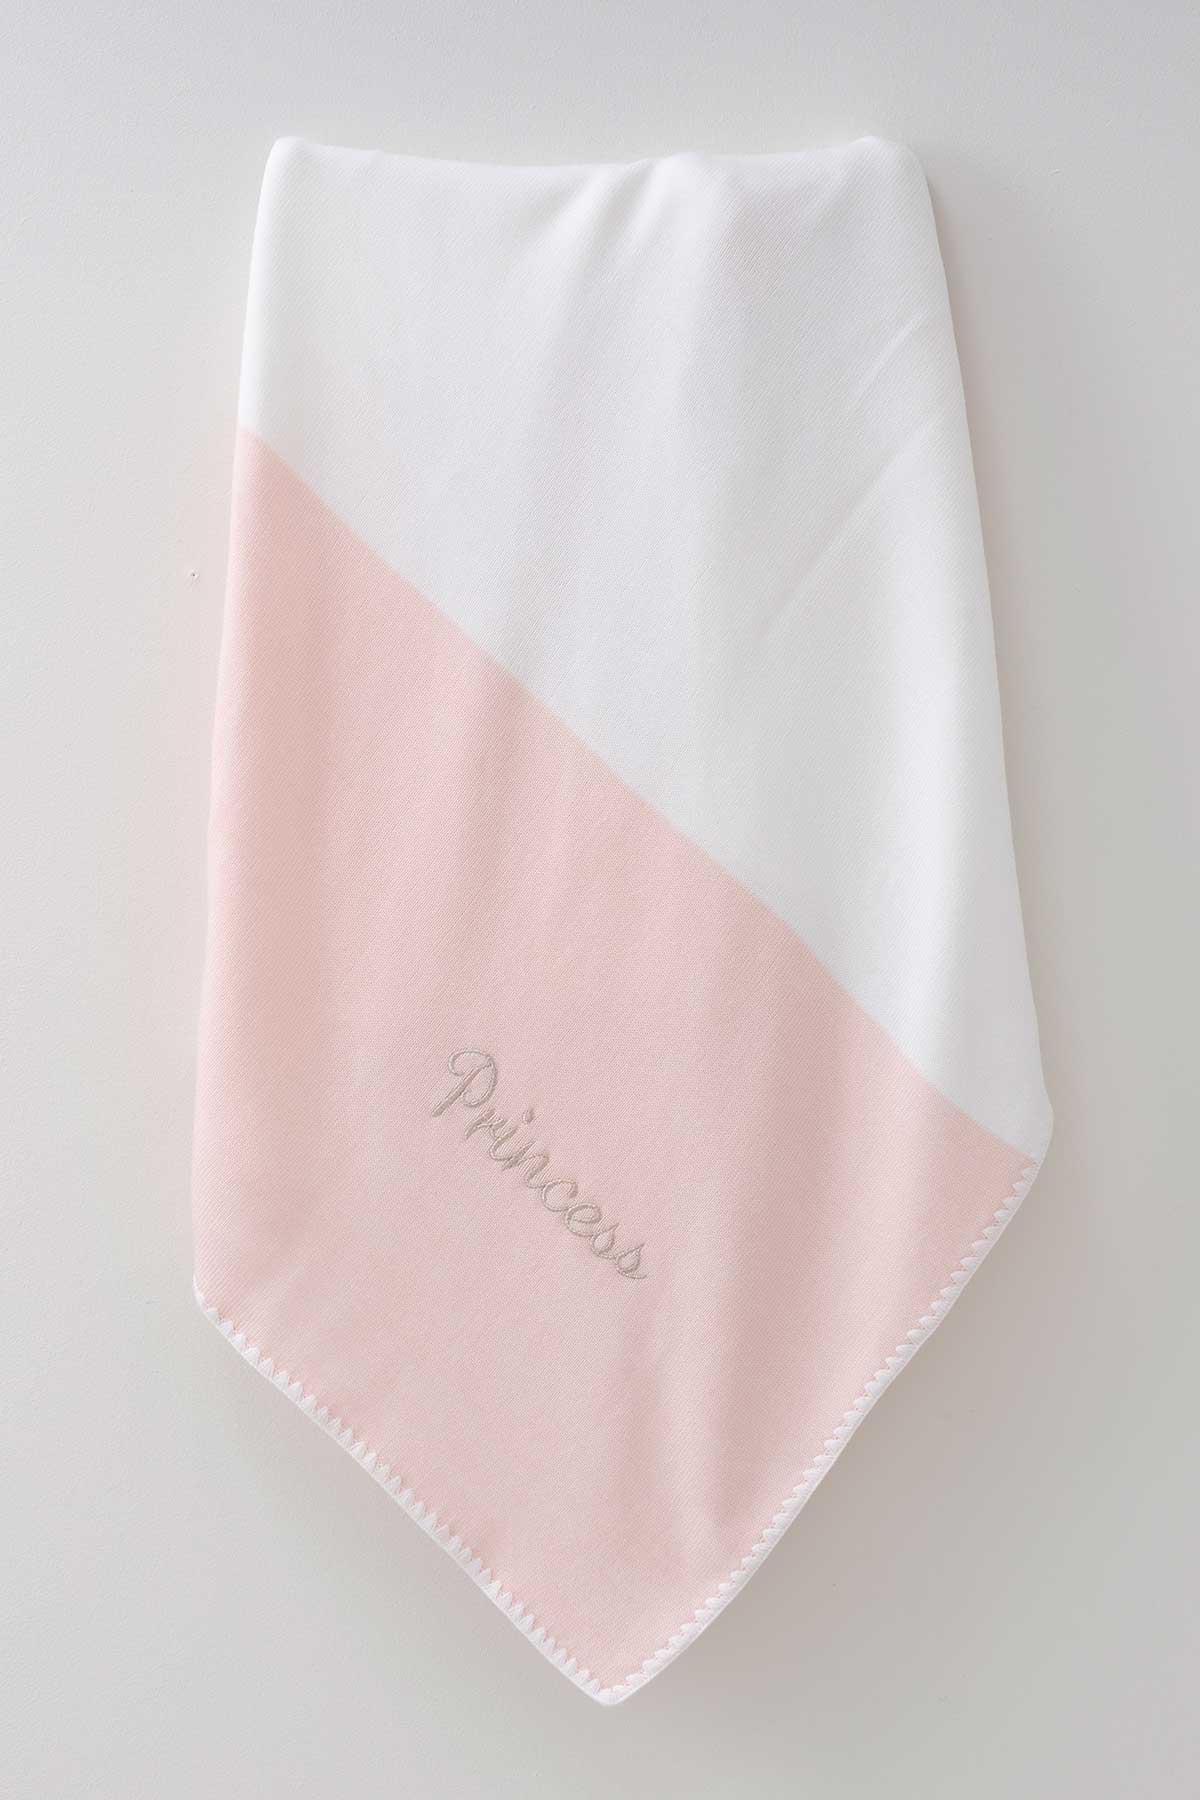 Princess Knitwear Baby Blanket